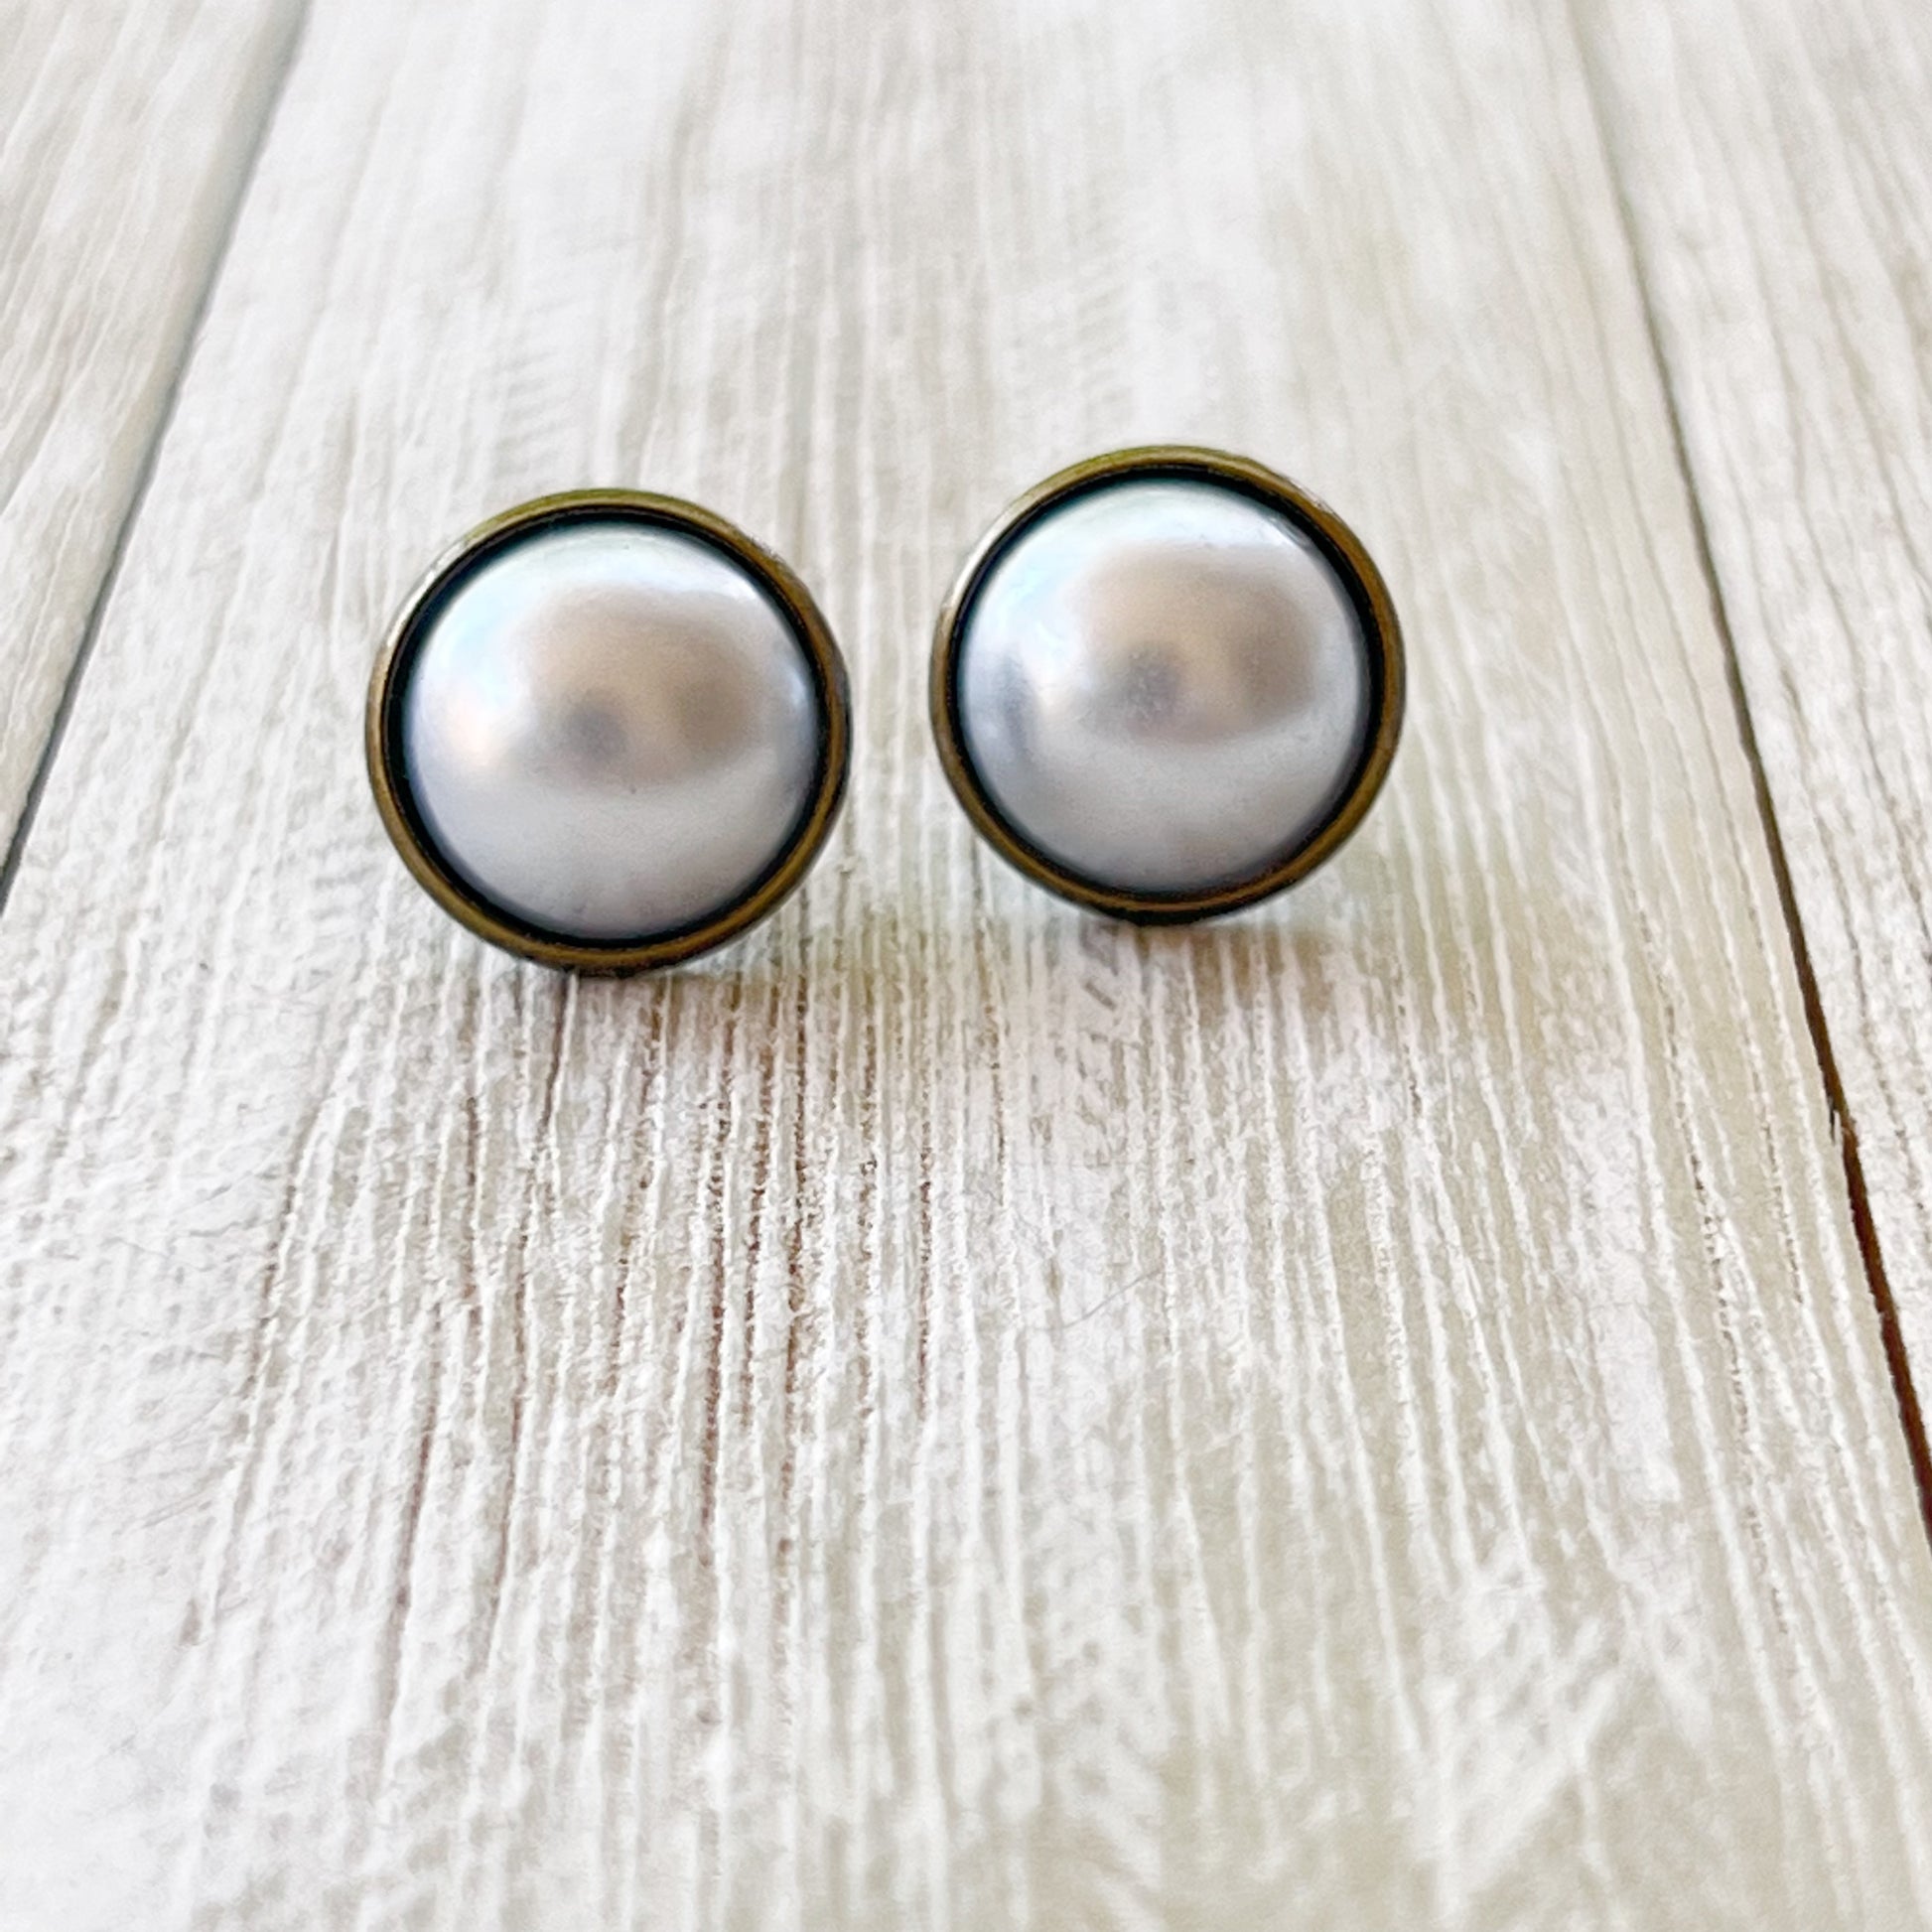 Silver White Pearl Earrings Studs, Stainless Steel Earrings, Boho Earrings, Bridesmaid Earrings, Mens Earrings Stud, Unique Earring